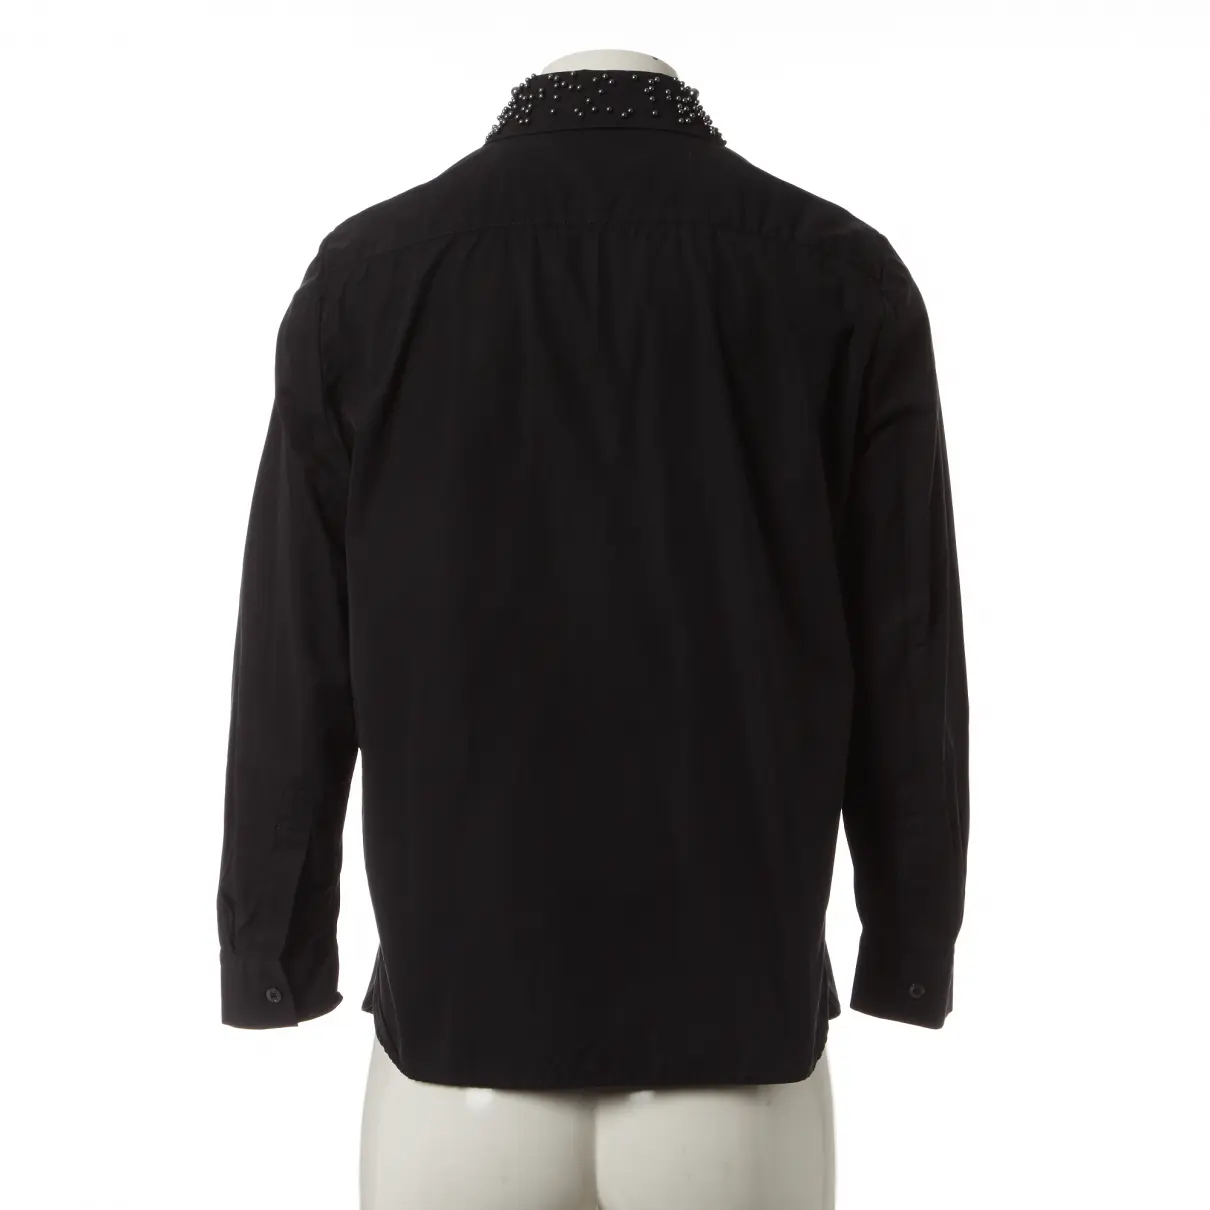 Buy Louis Vuitton Shirt online